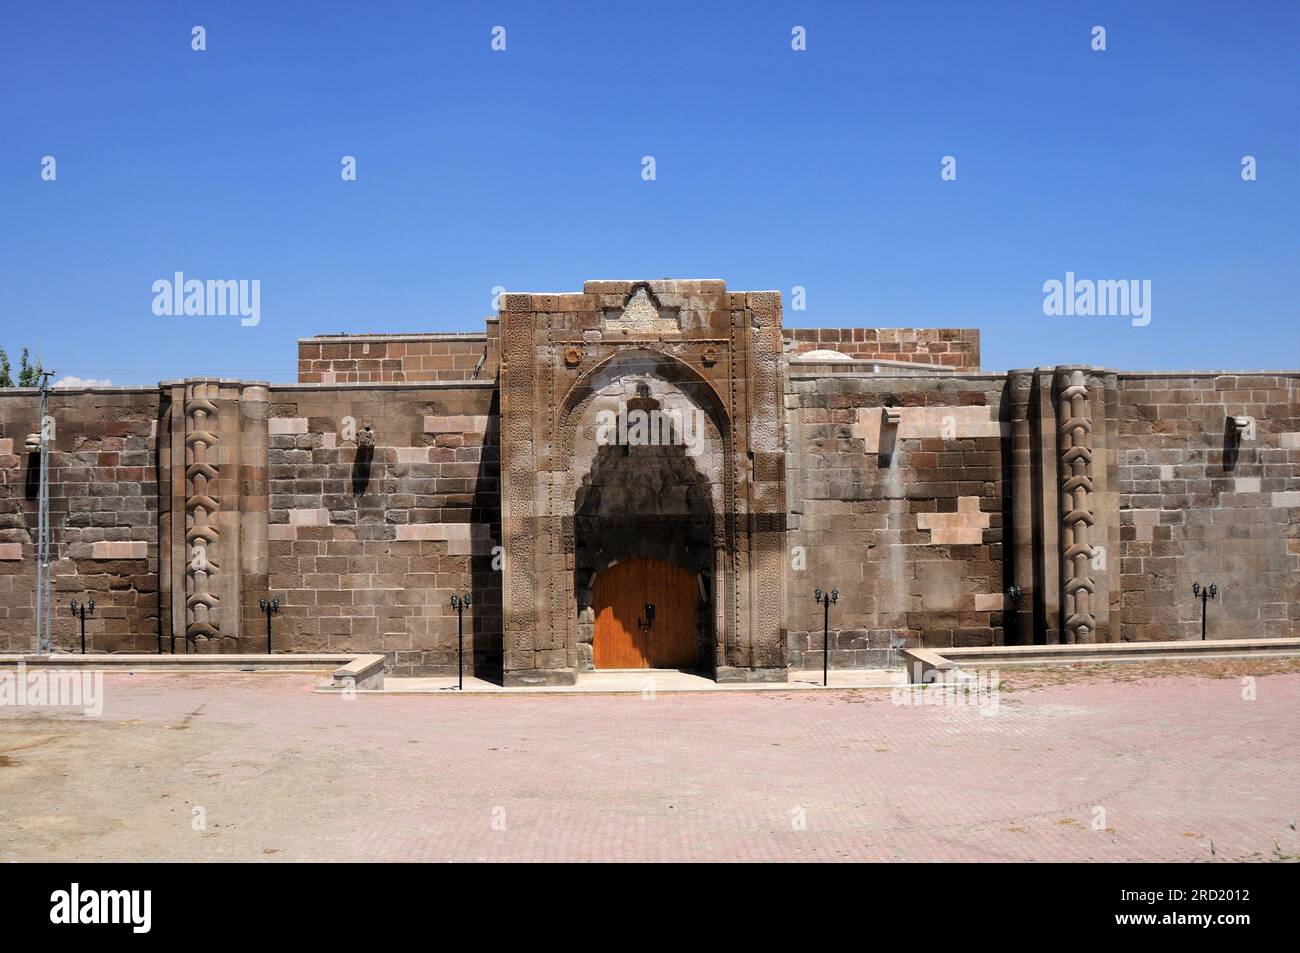 Karatay Caravanserai located in the district of Bunyan in Kayseri. The caravanserai was built in 1240 by the Seljuk vizier Celalettin Karatay. Stock Photo